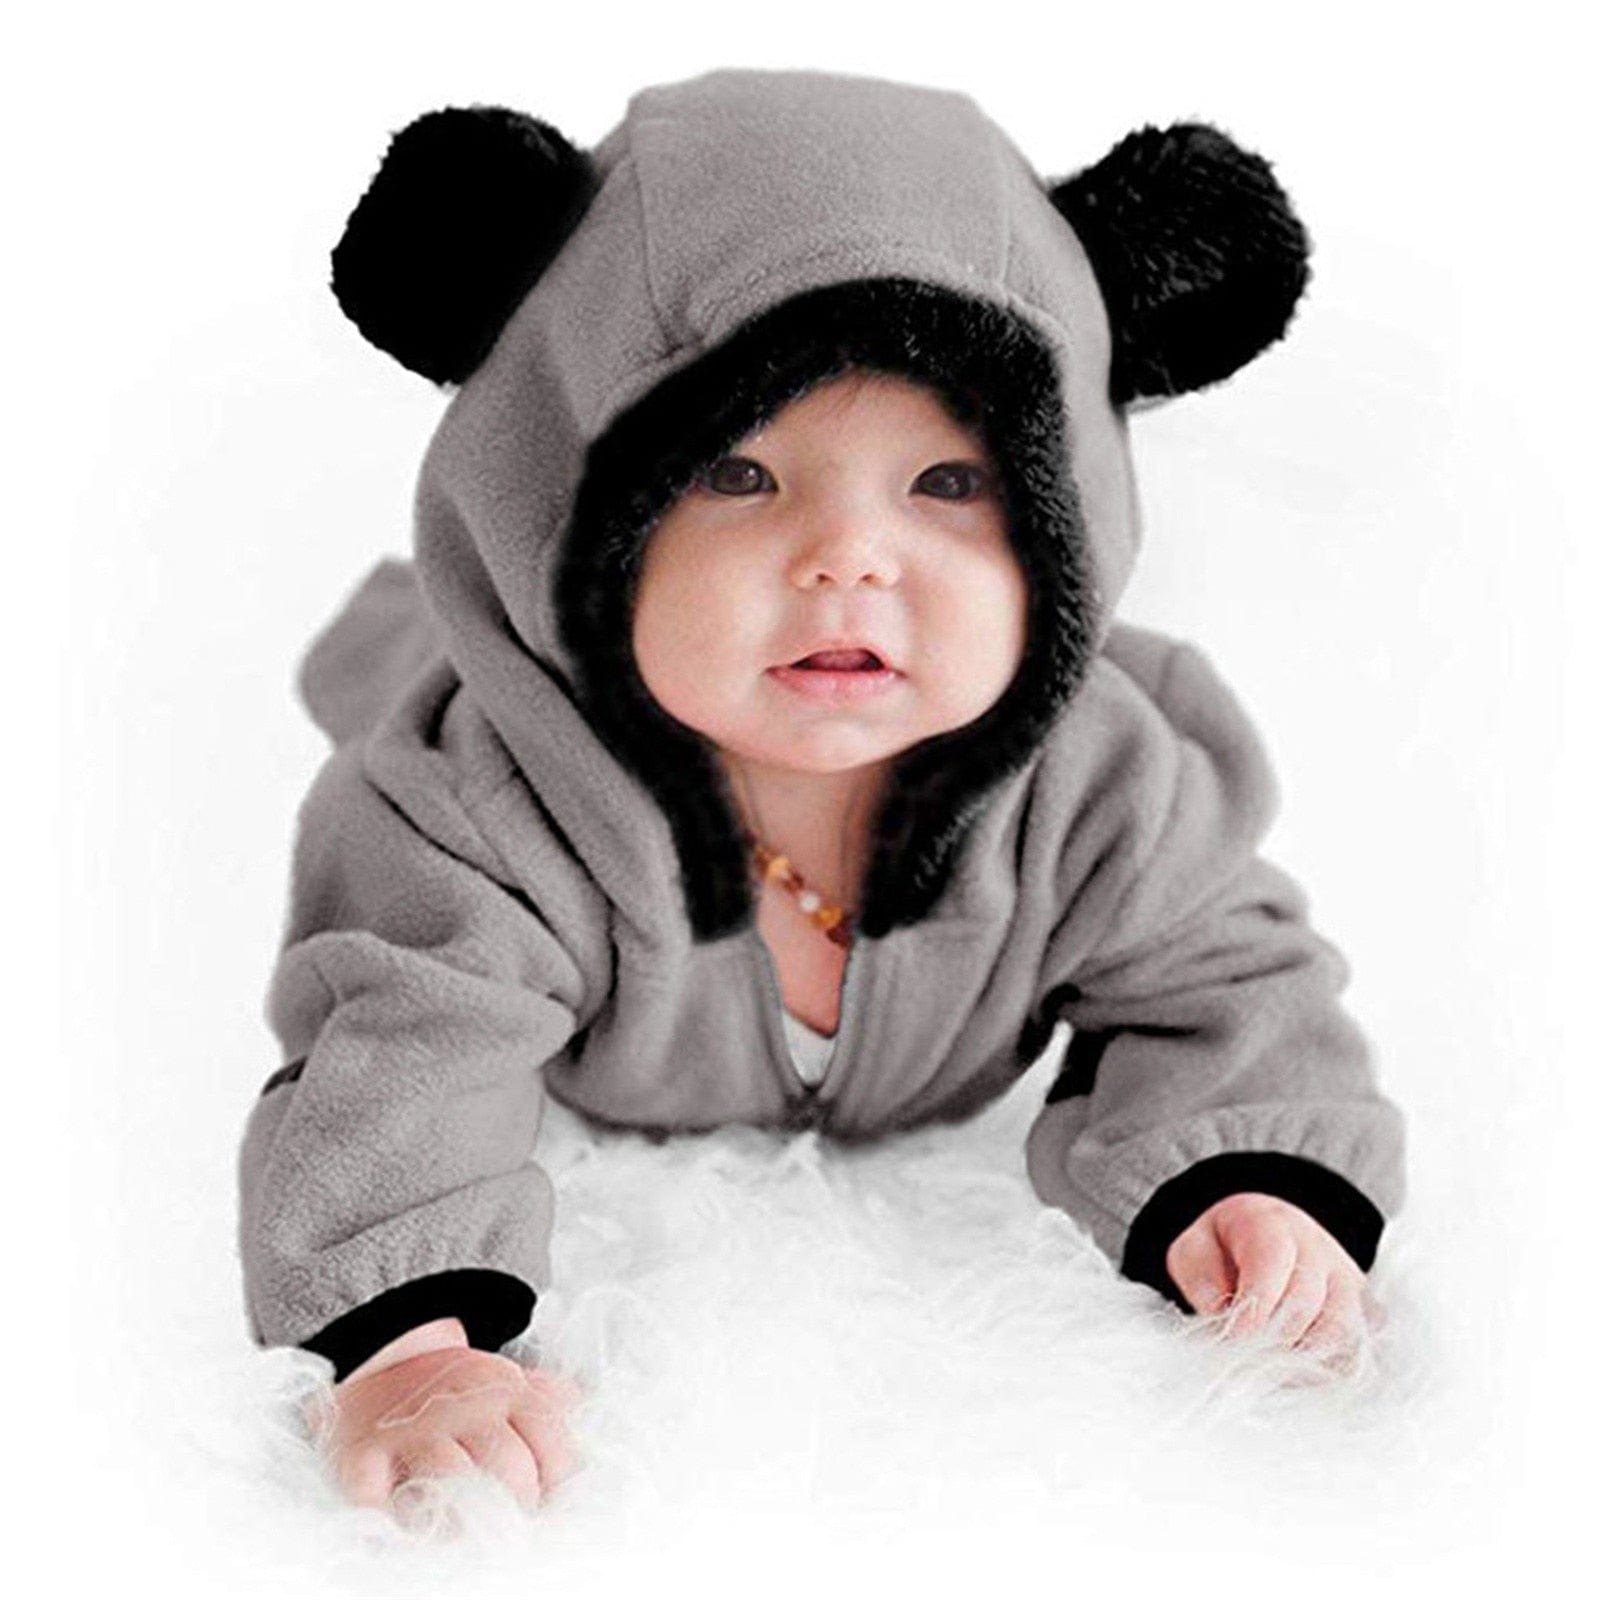 Buy Best Baby Newborn/Infant Winter Warm Romper For age 0-24 Months